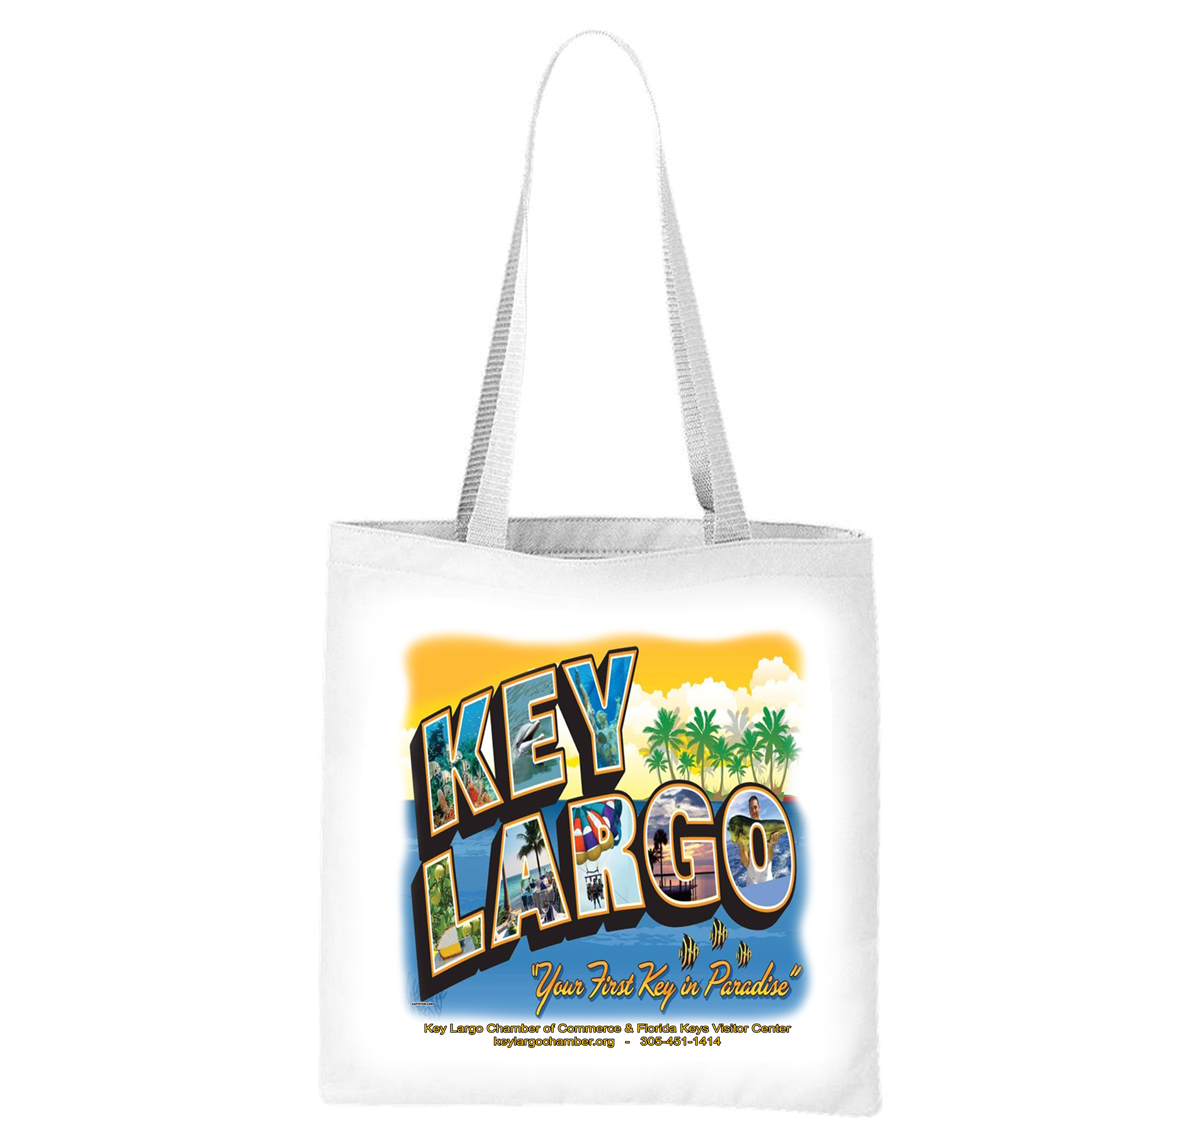 Design 1 - Key Largo Chamber of Commerce Liberty Bag